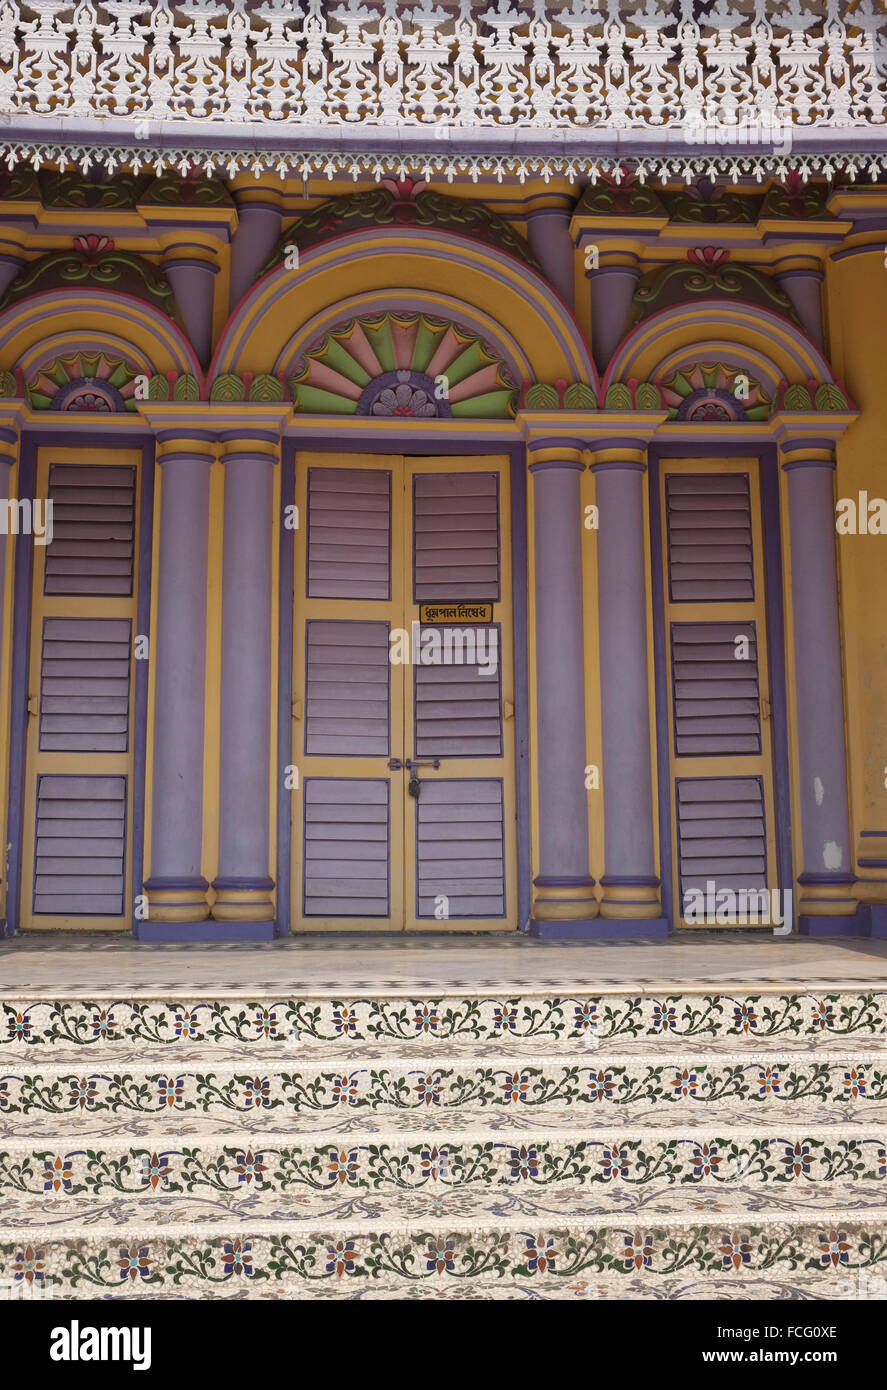 Ornate facade of a building in the Sheetalnathji Jain Temple complex, Kolkata (Calcutta), West Bengal, India. Stock Photo